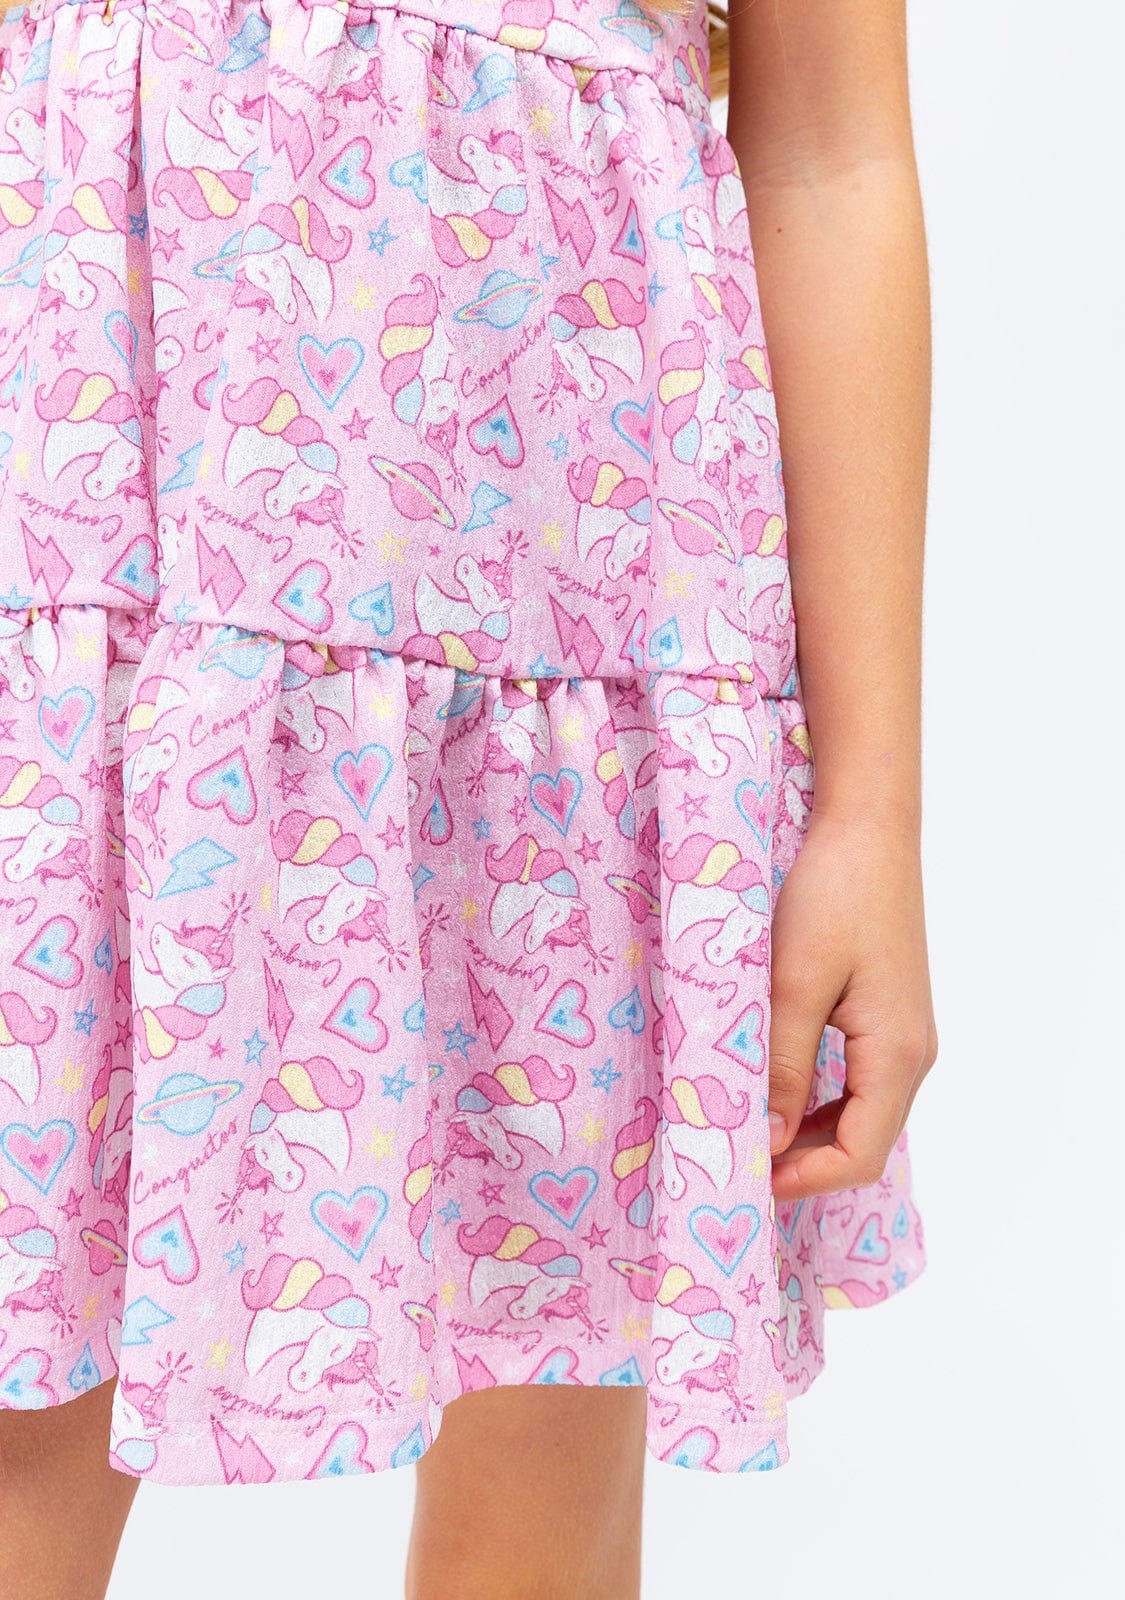 CONGUITOS TEXTIL Clothing Girl´s Unicorn Print Pink Conguitos Dress